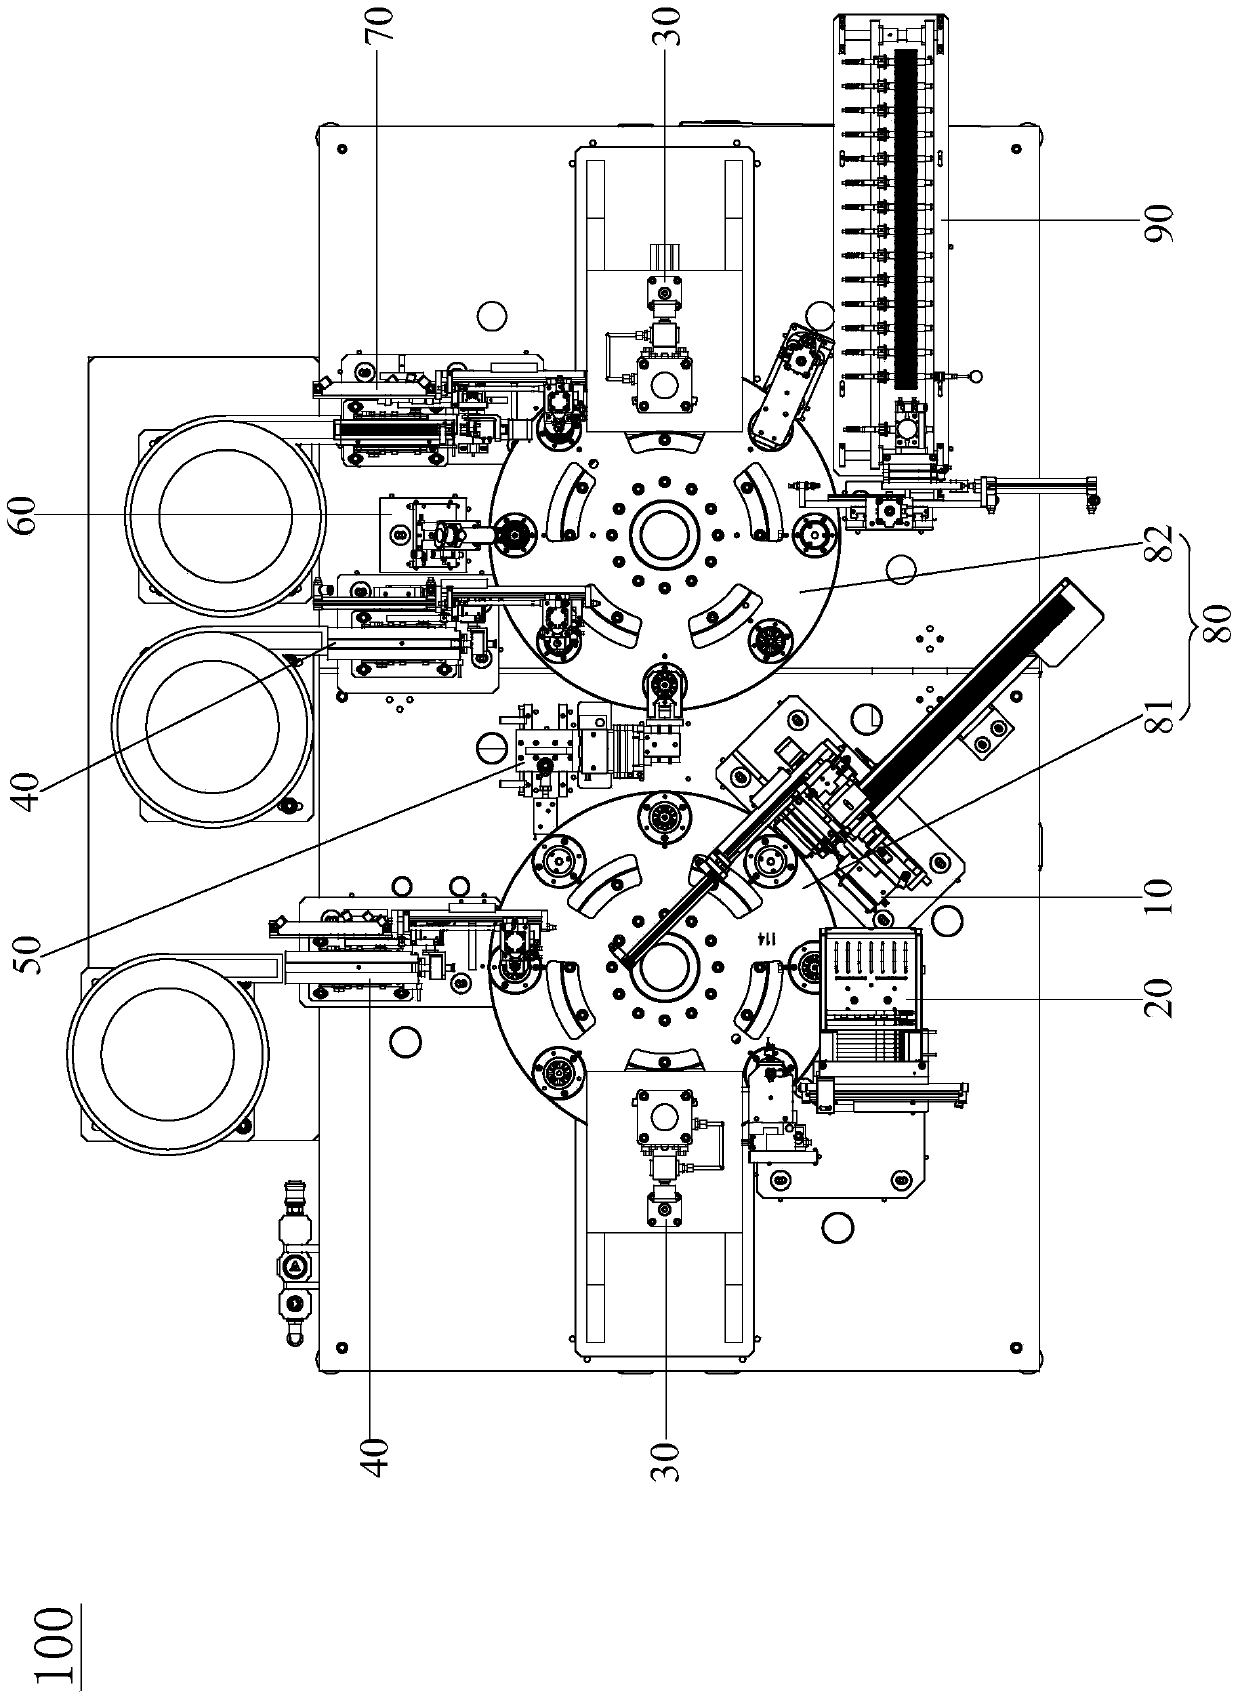 Motor rotor automatic assembly machine